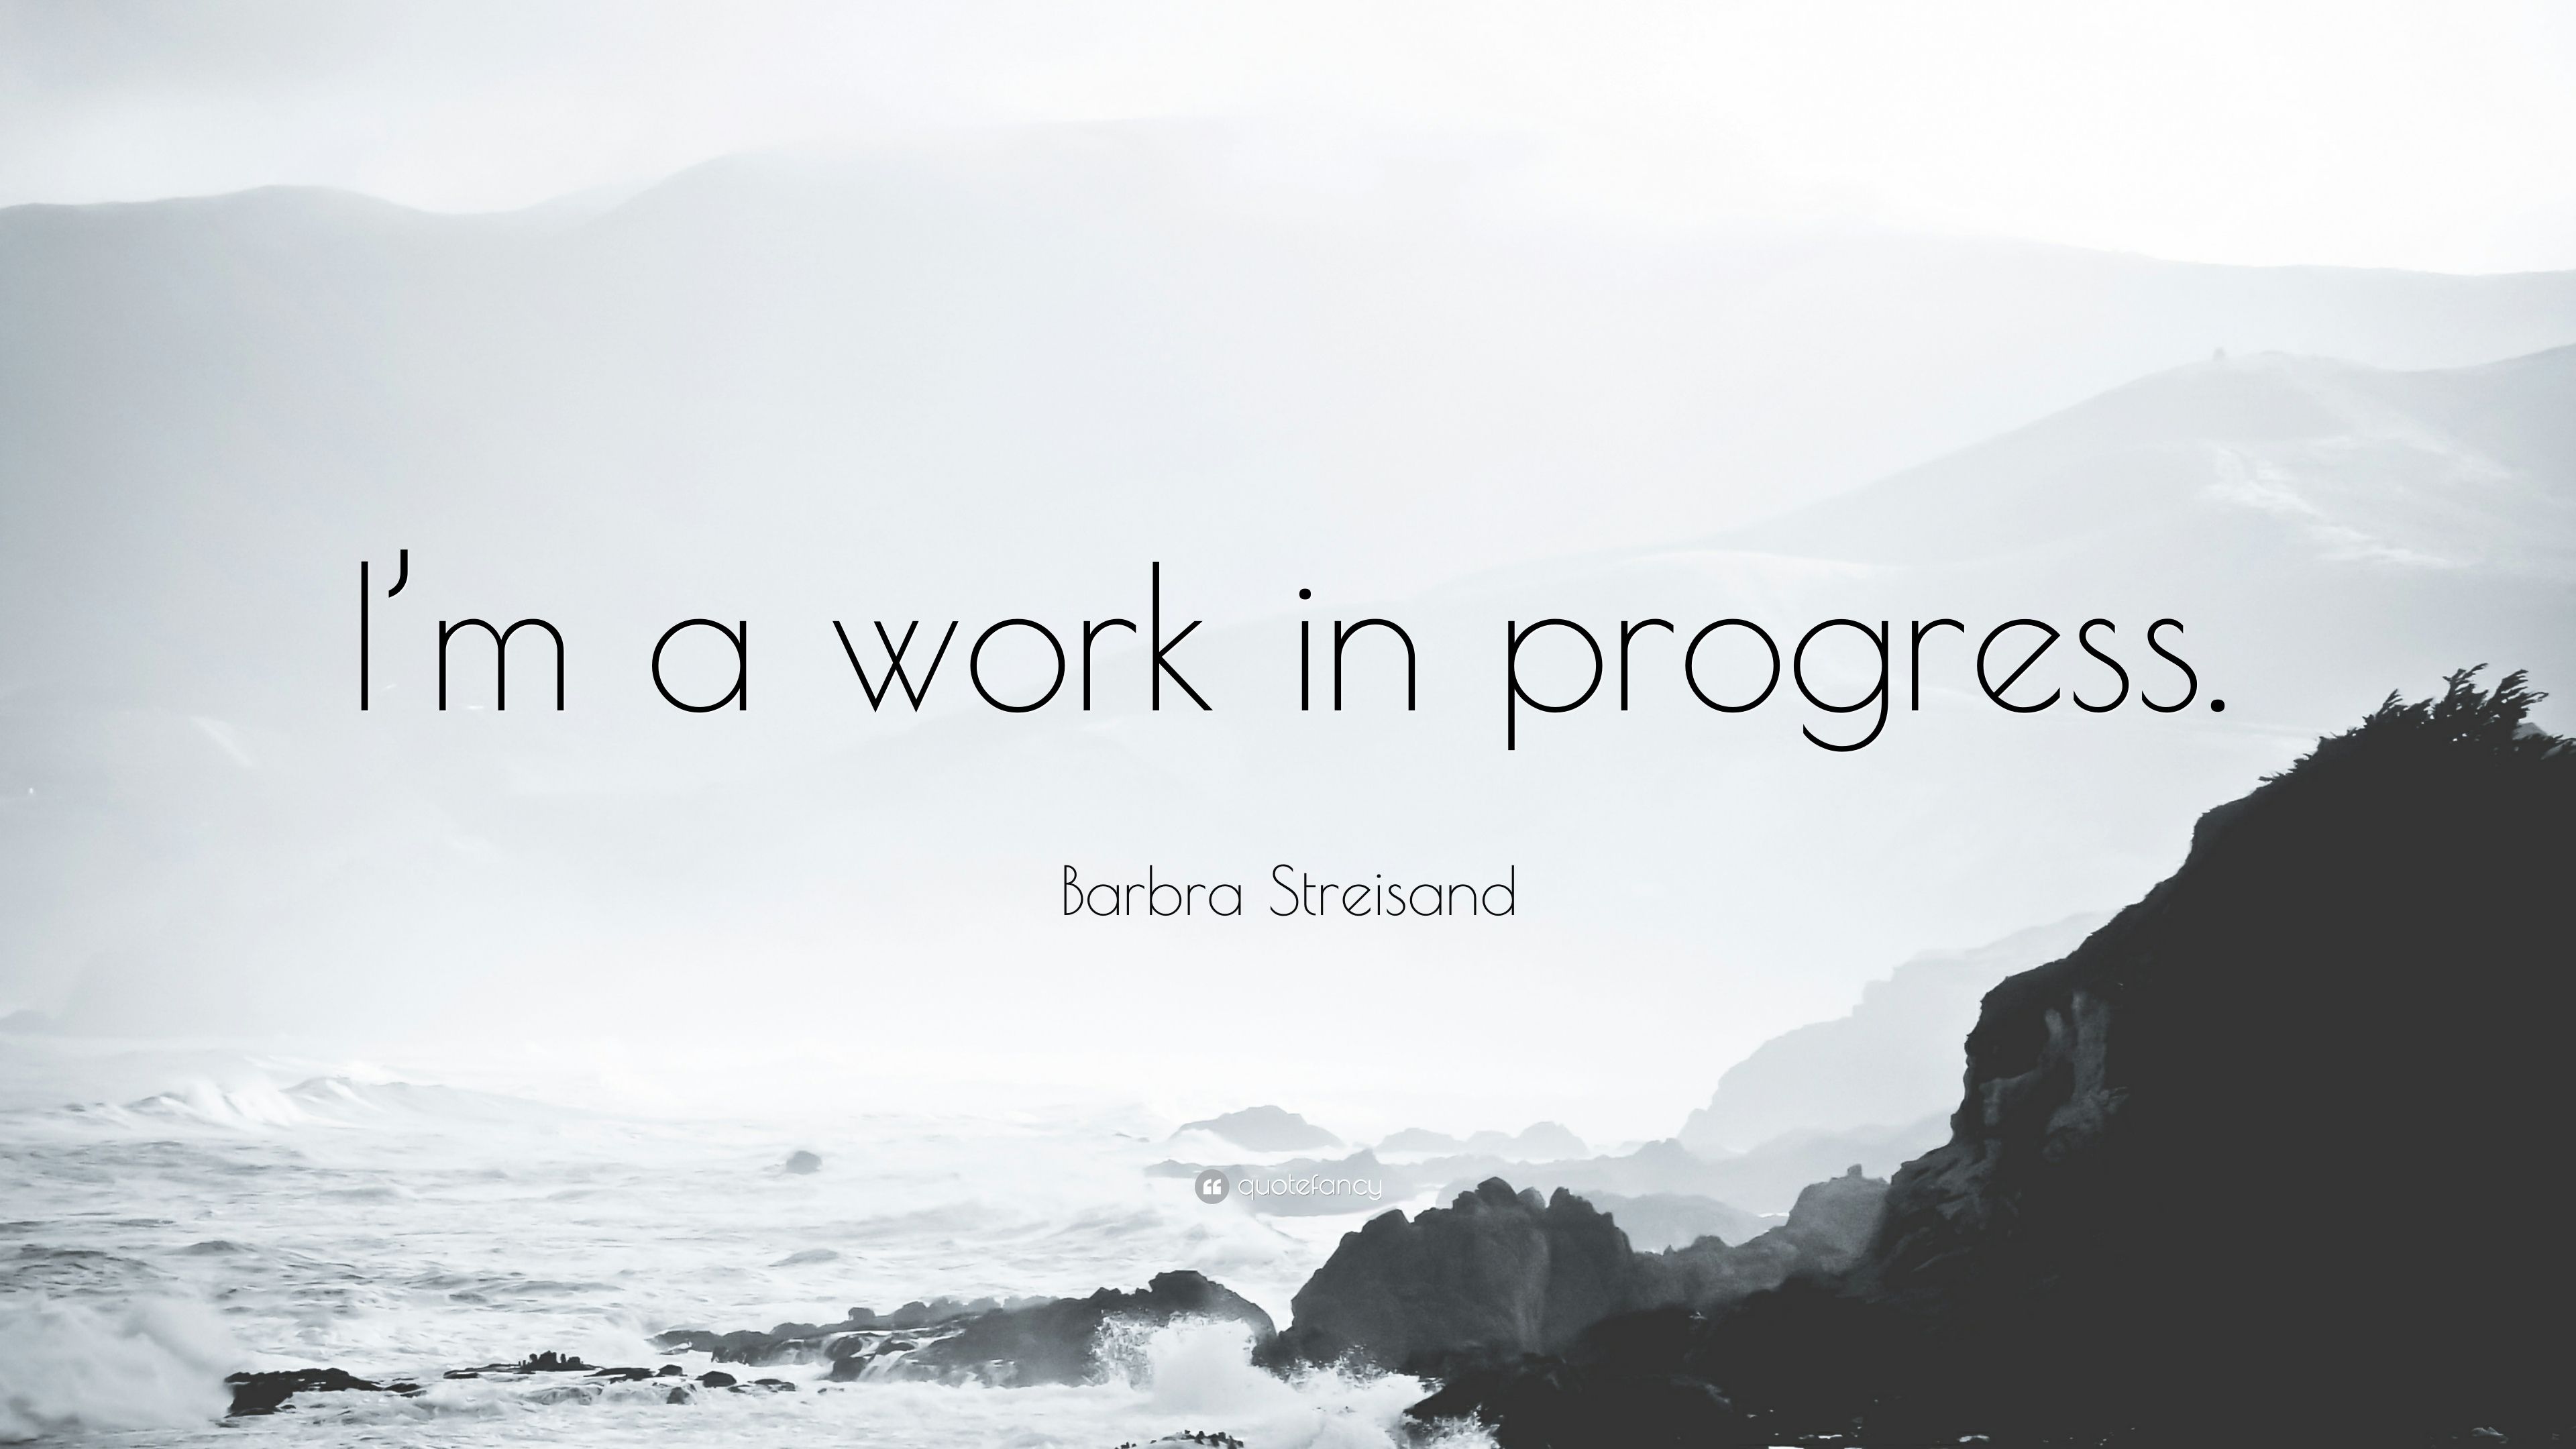 Barbra Streisand Quote: “I'm a work in progress.” (7 wallpaper)